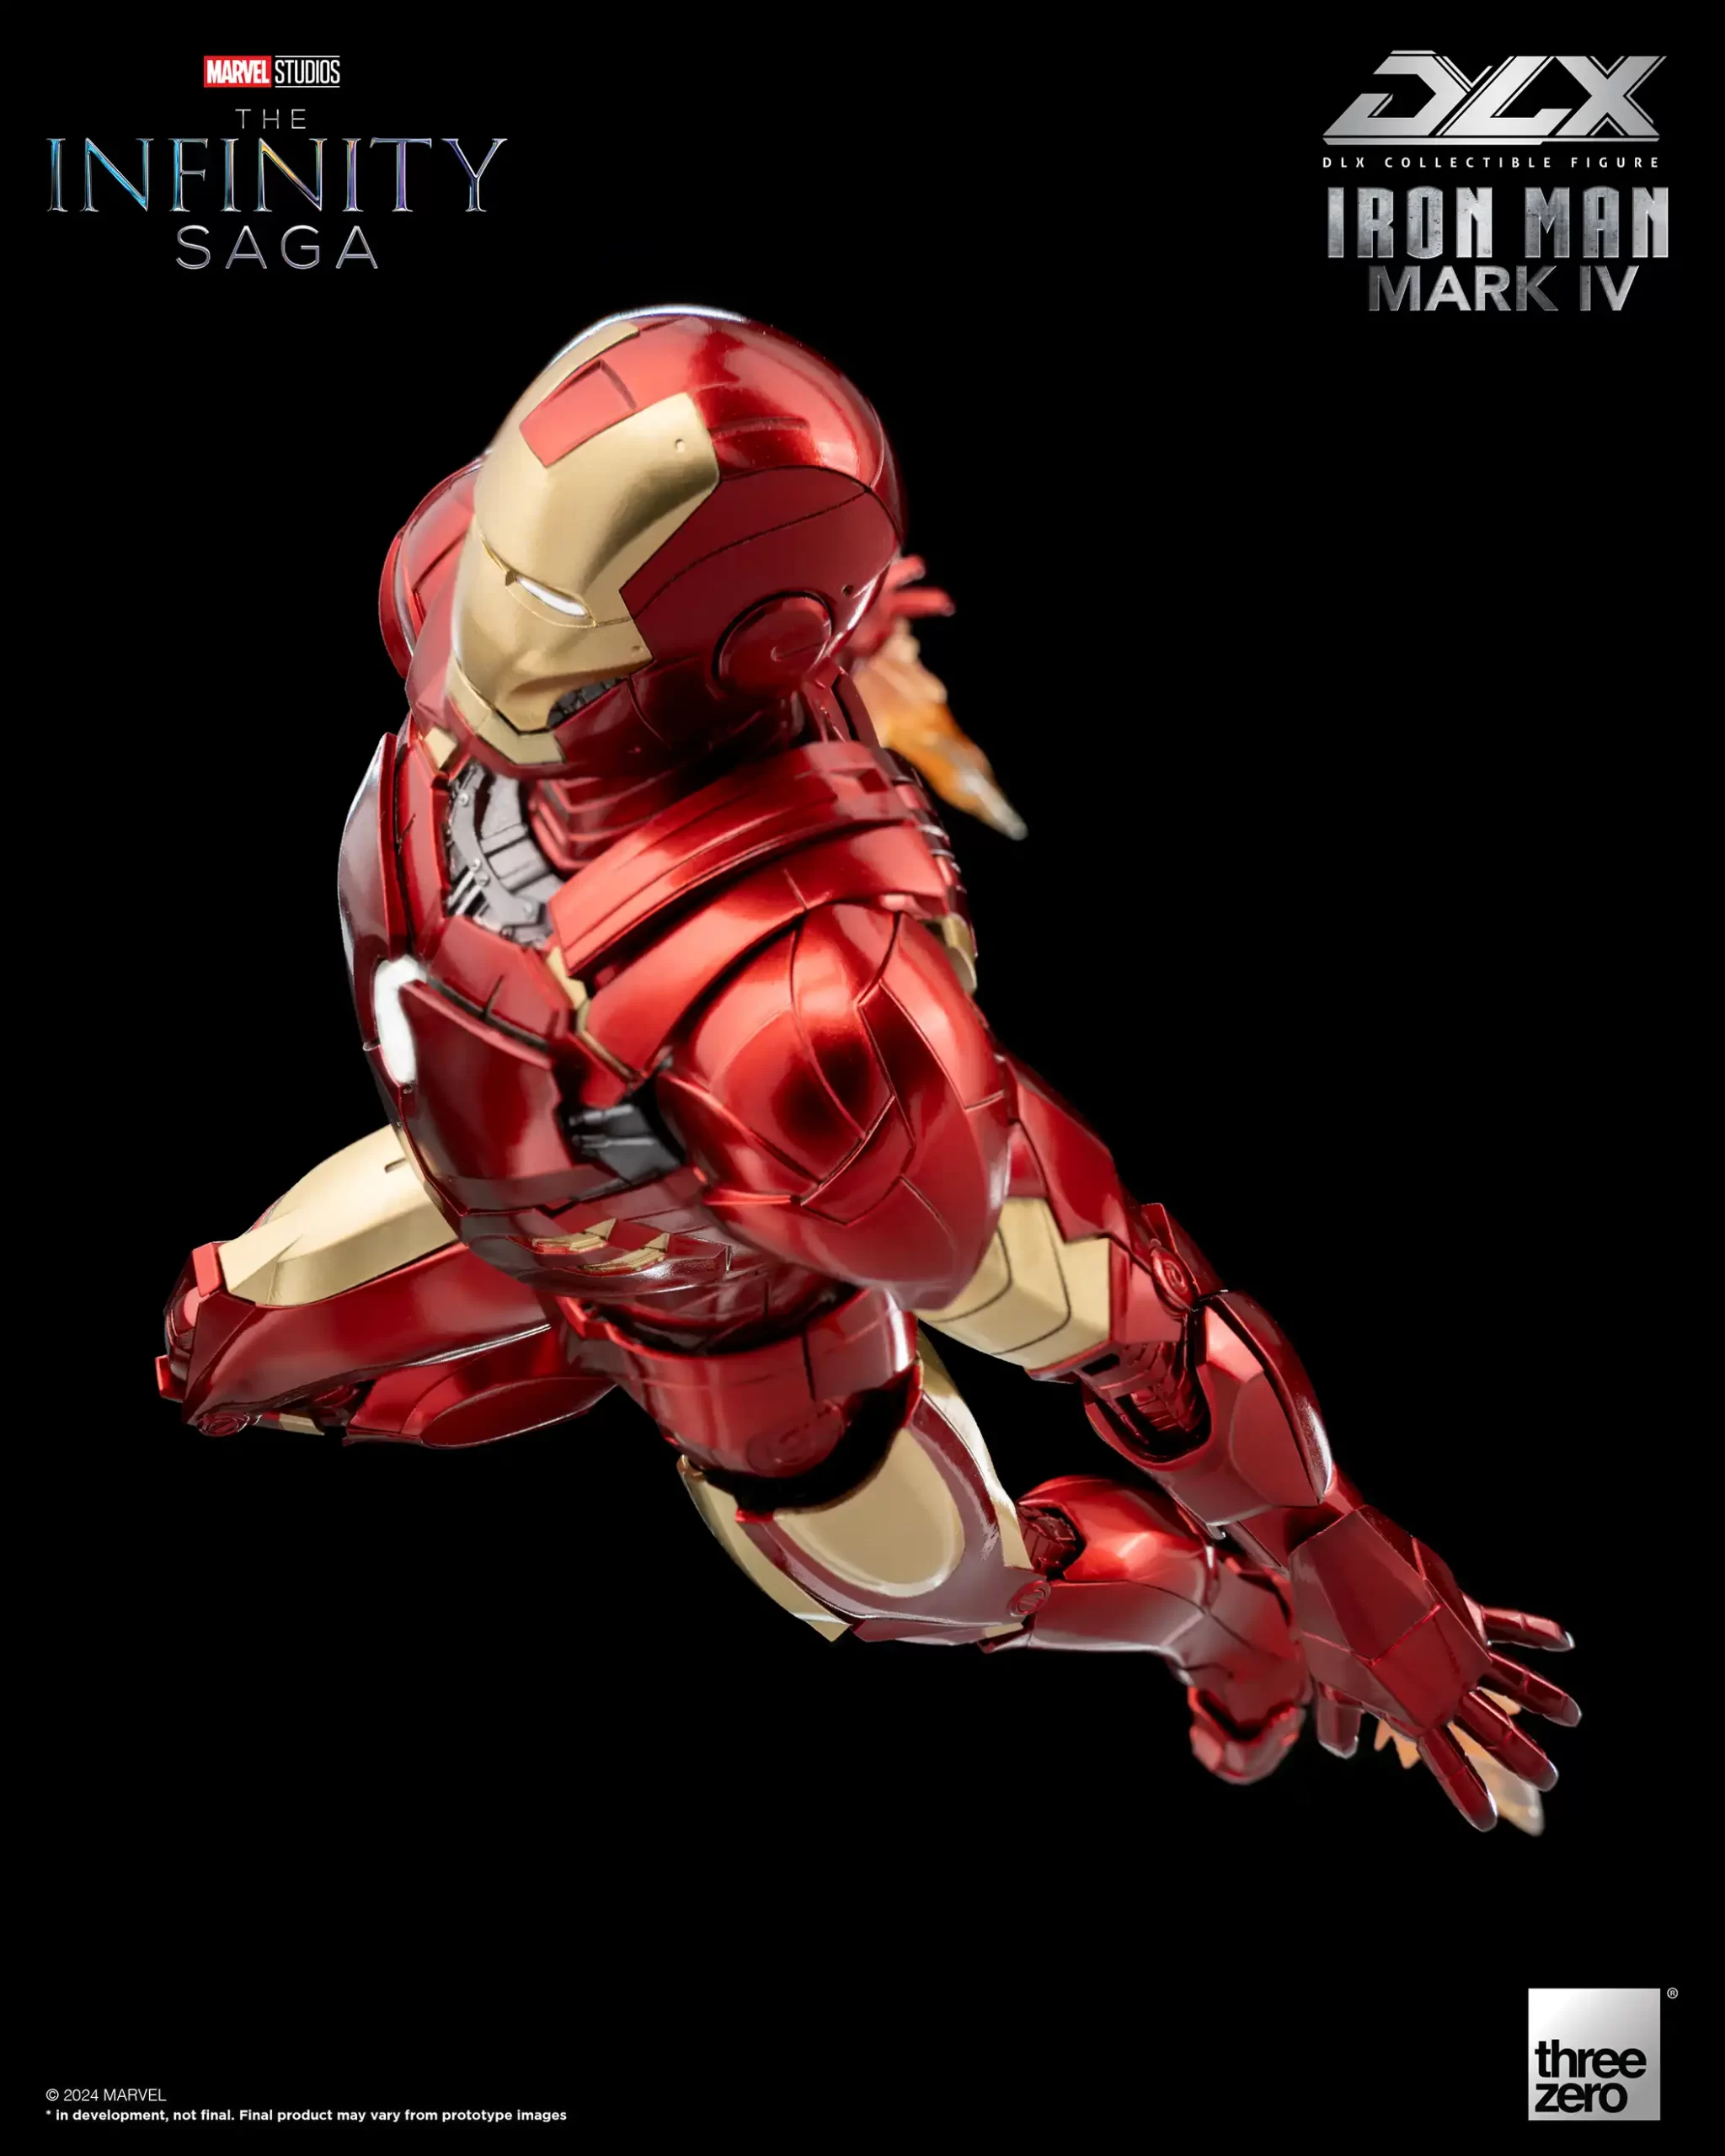 Marvel Studios: The Infinity SagaDLX アイアンマン・マーク4 